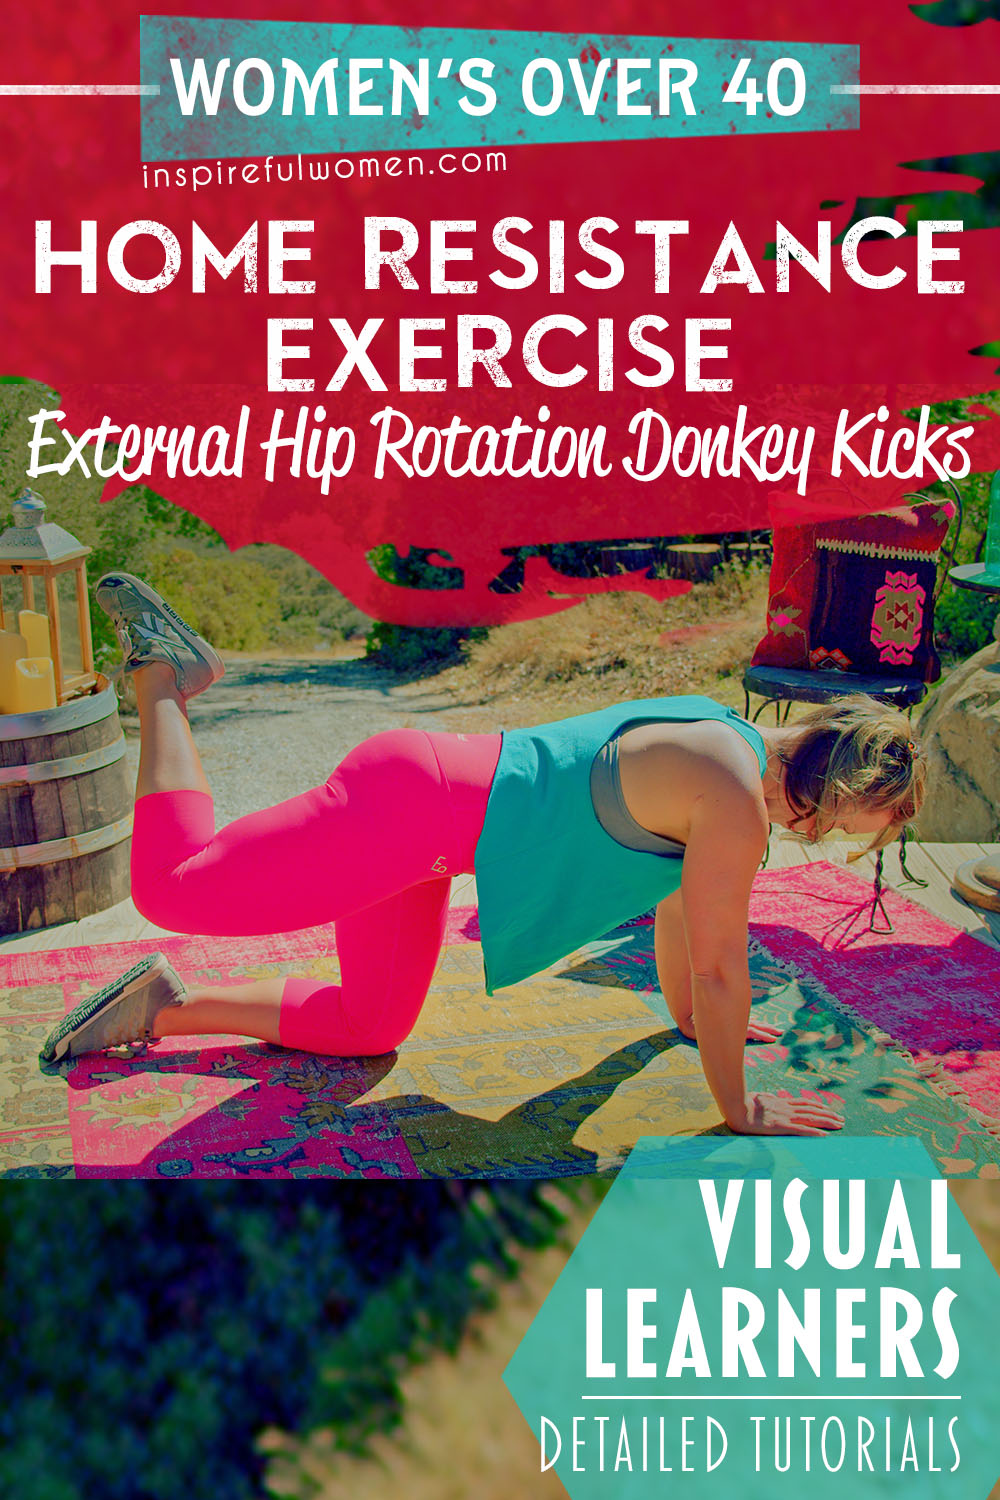 donkey-kick-external-rotation-bodyweight-ground-glute-activation-exercise-women-40-plus